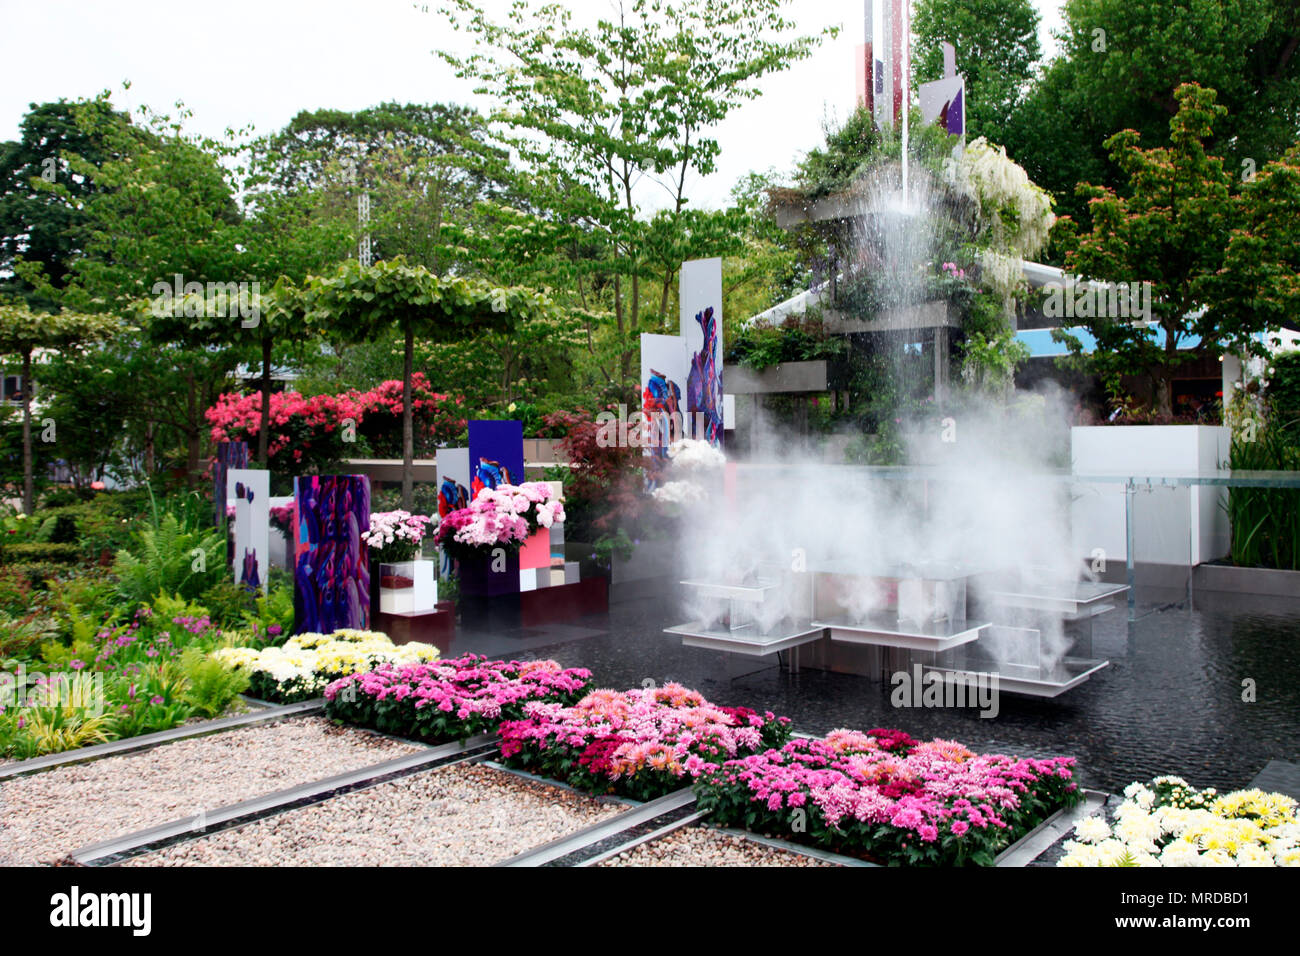 The Wuhan Water Garden, RHS Chelsea Flower Show 2018 Stock Photo